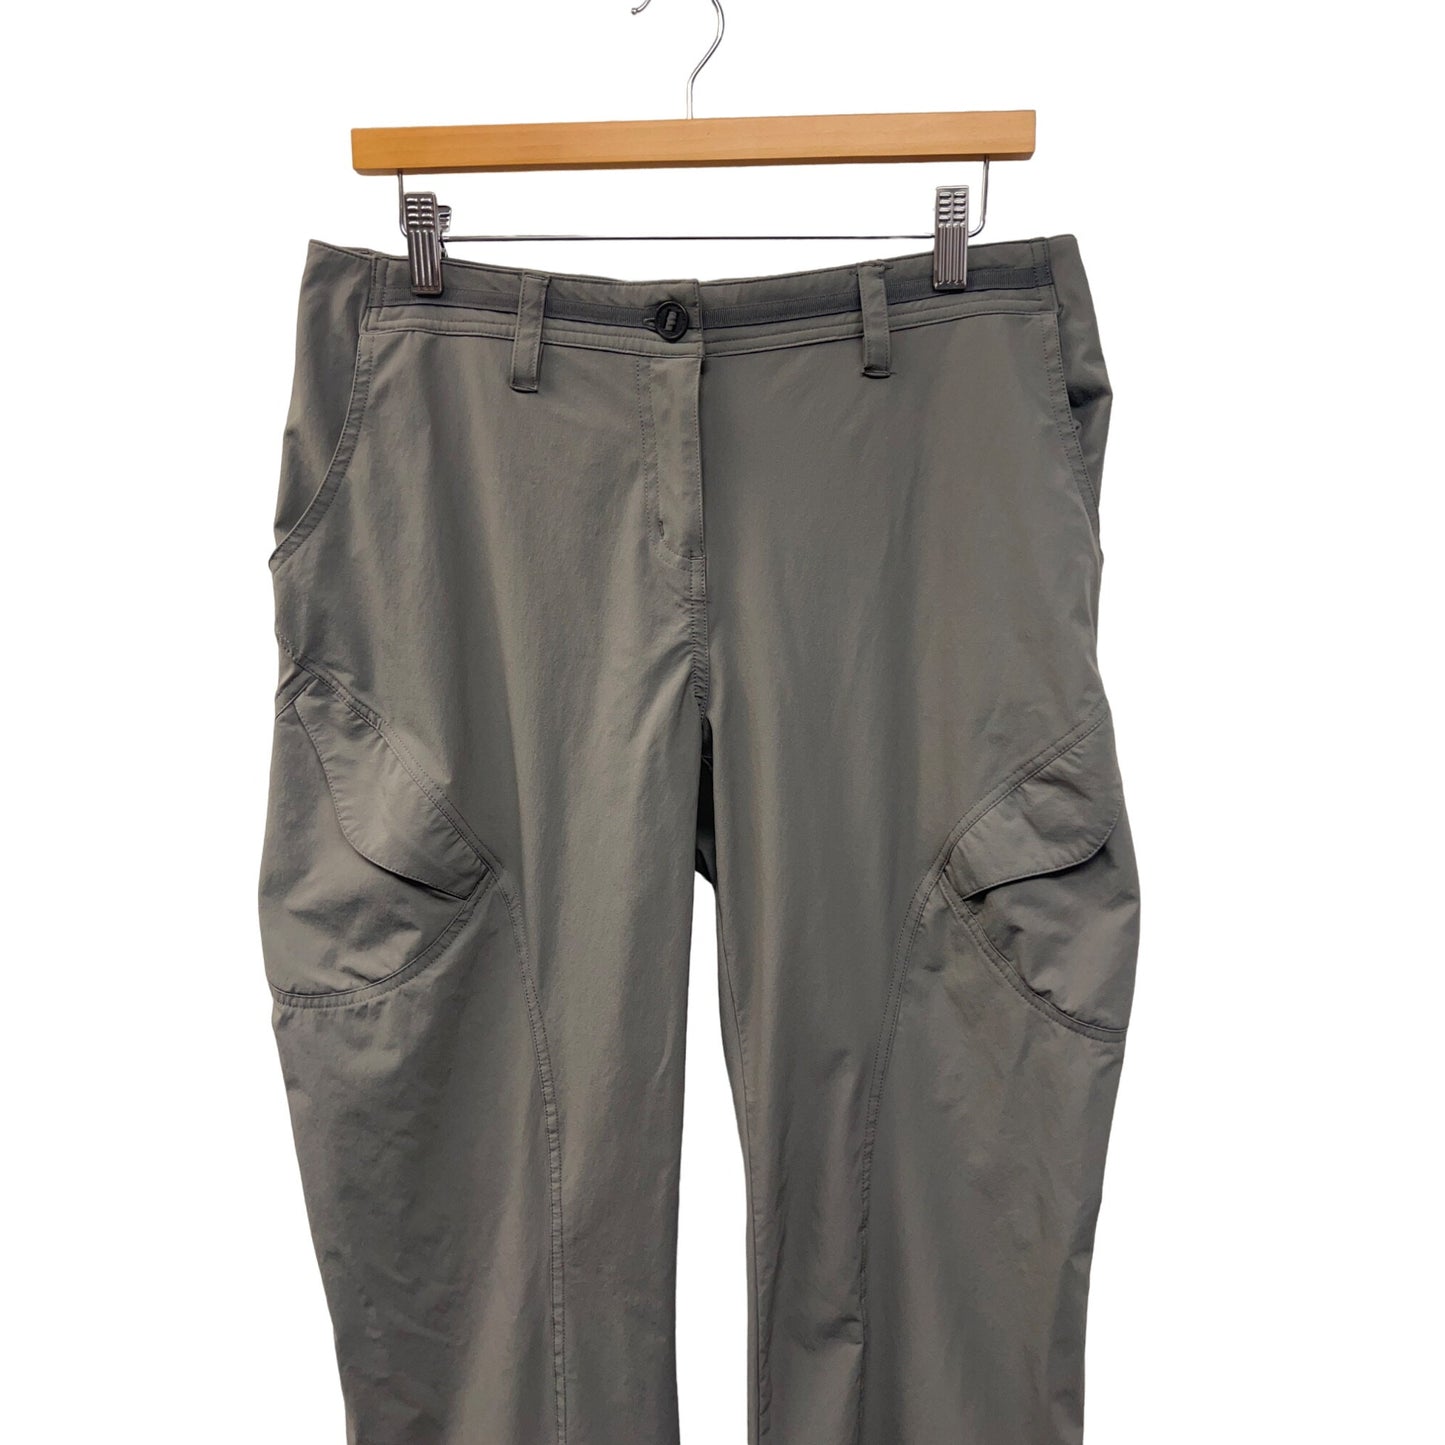 Exofficio Taupe Gray Outdoor Nylon Hiking Pants